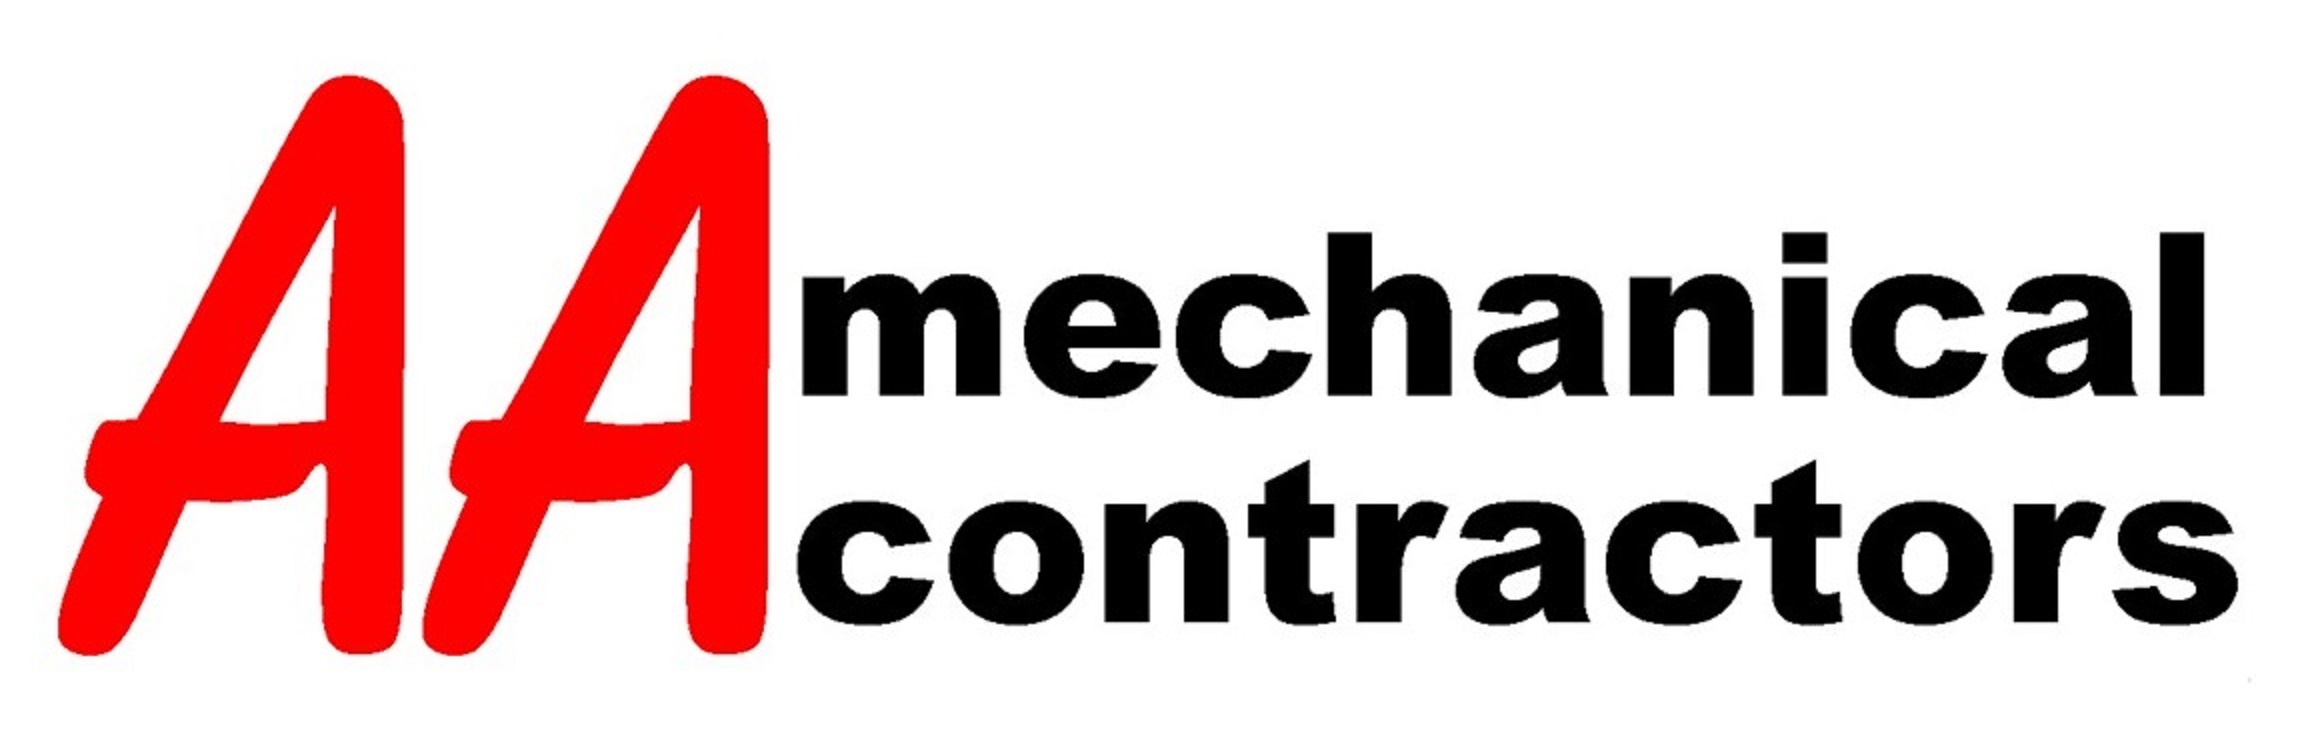 AA Mechanical Contractors, LLC